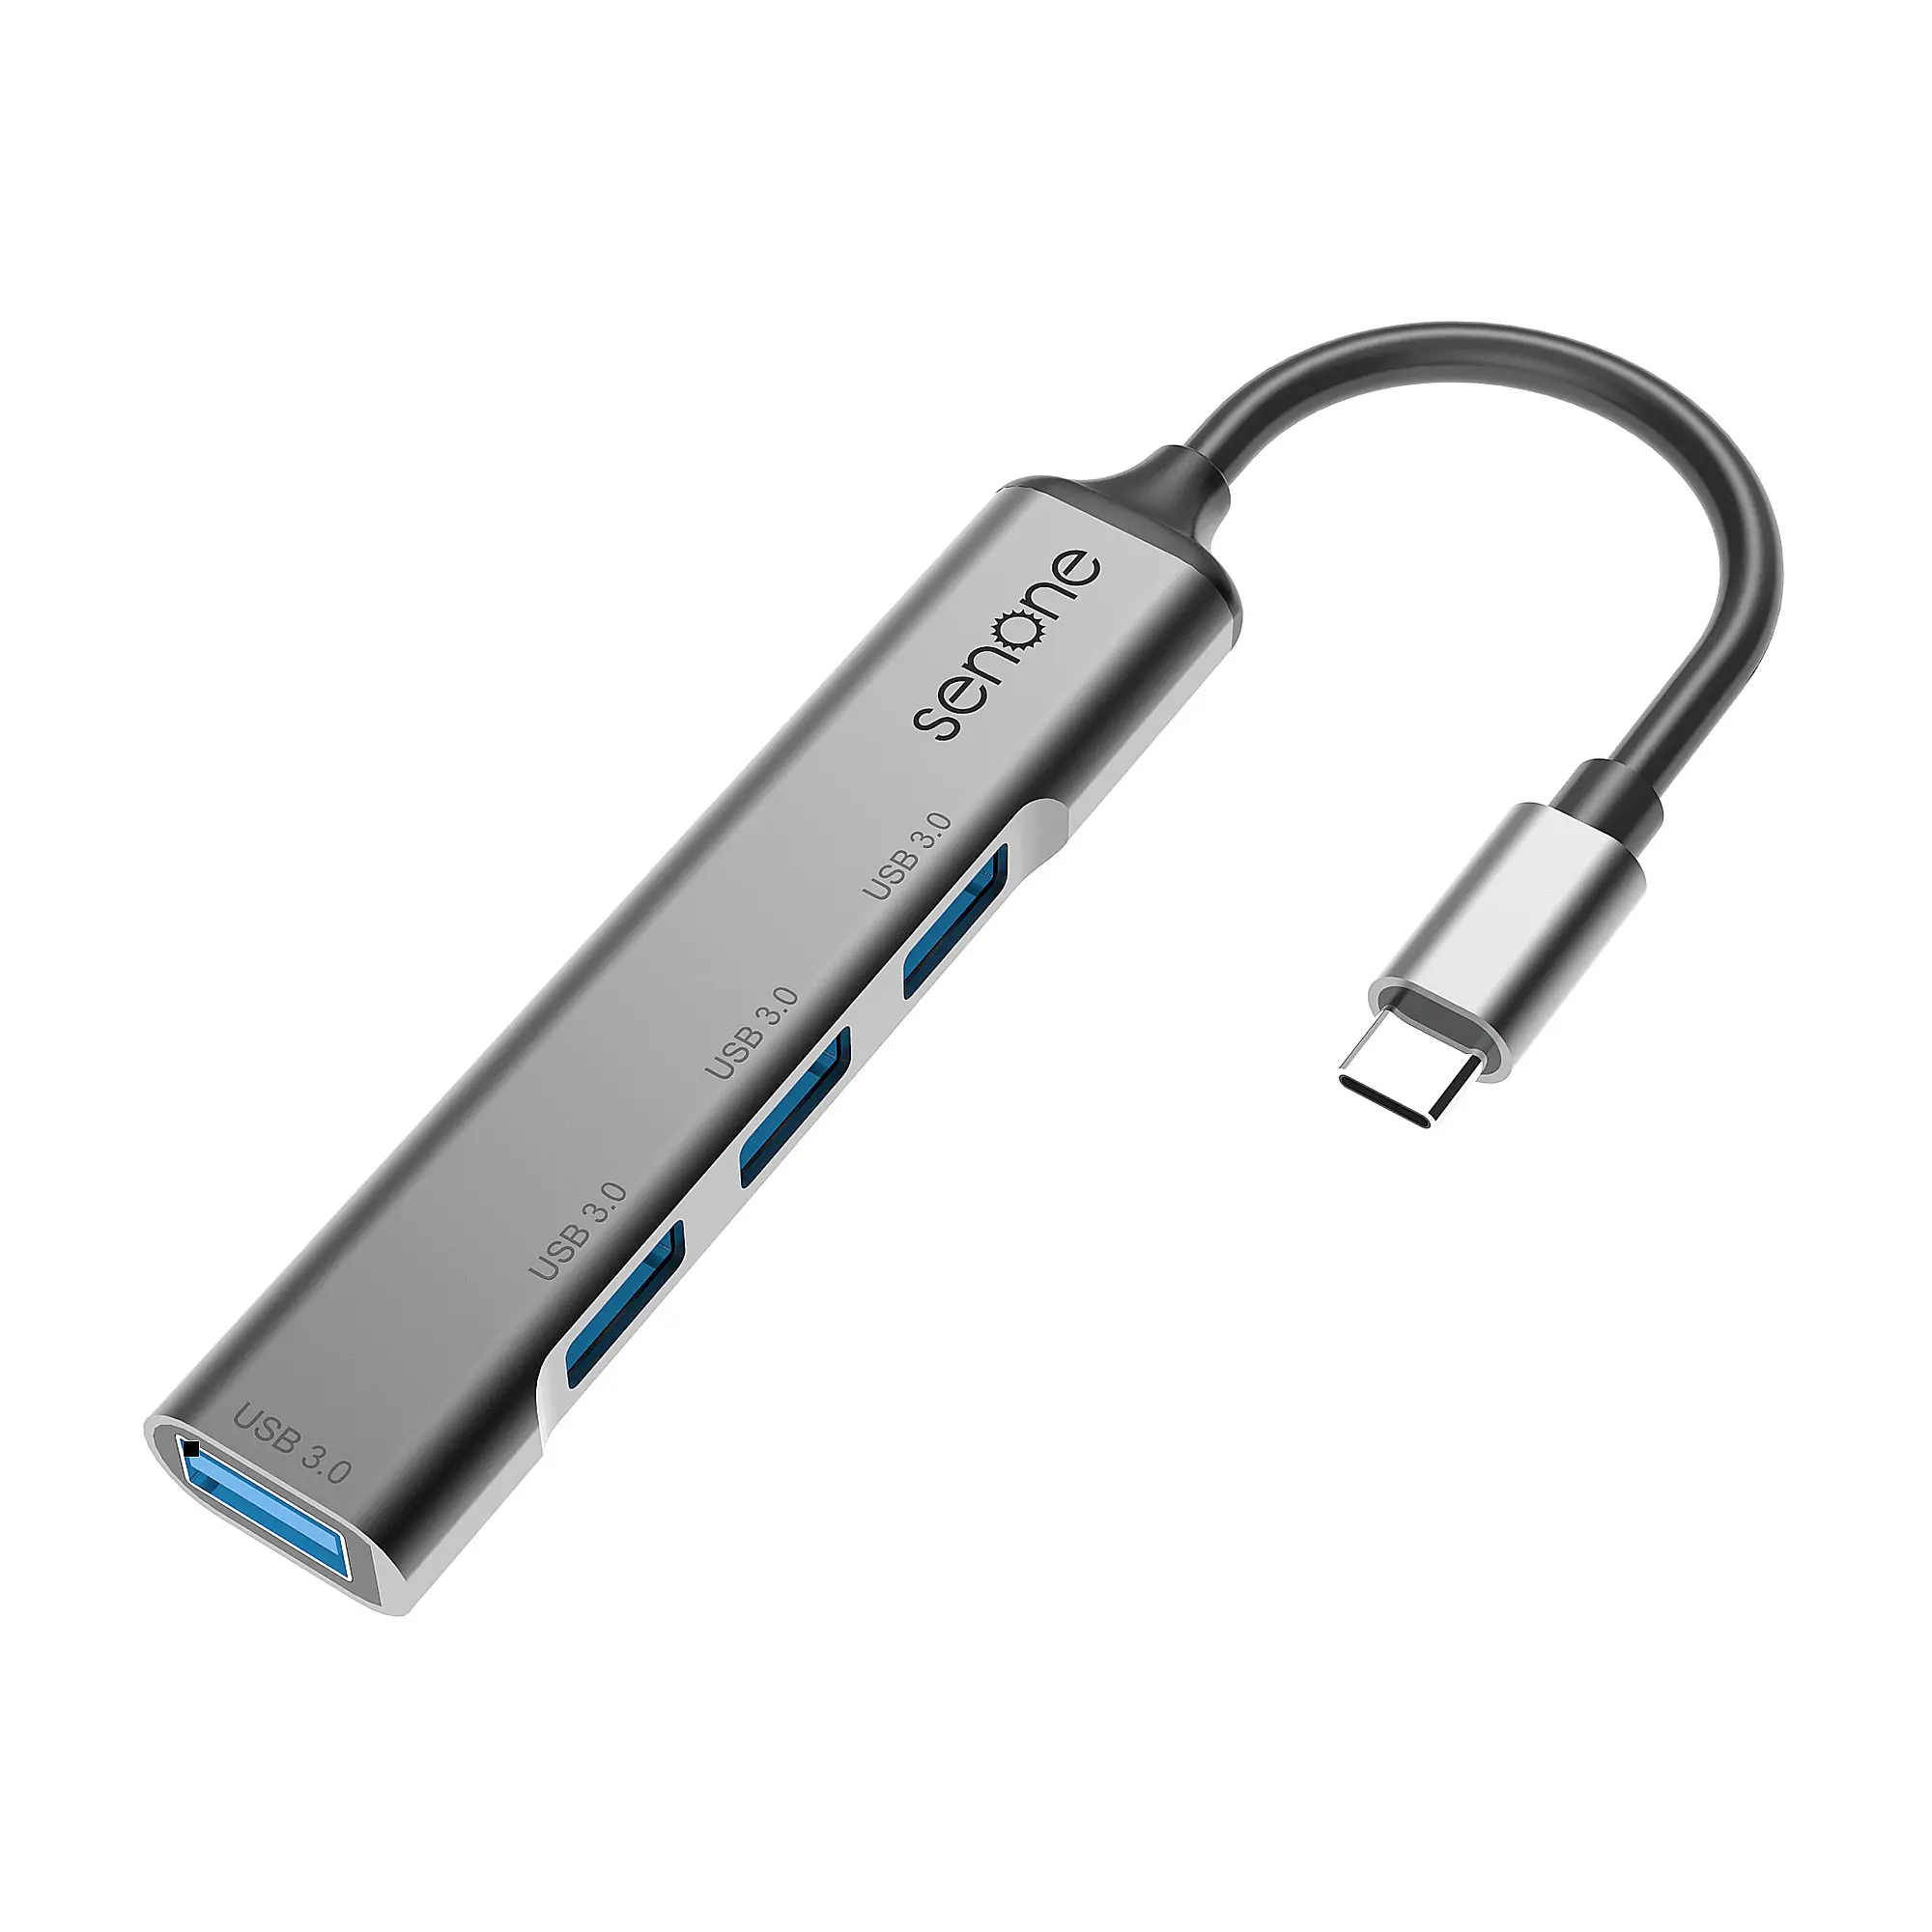 Super Speed Data Transfer HUB Adapter Multifunction USB 3.0 Hub 4-in-1 Aluminum Alloy USB HUB